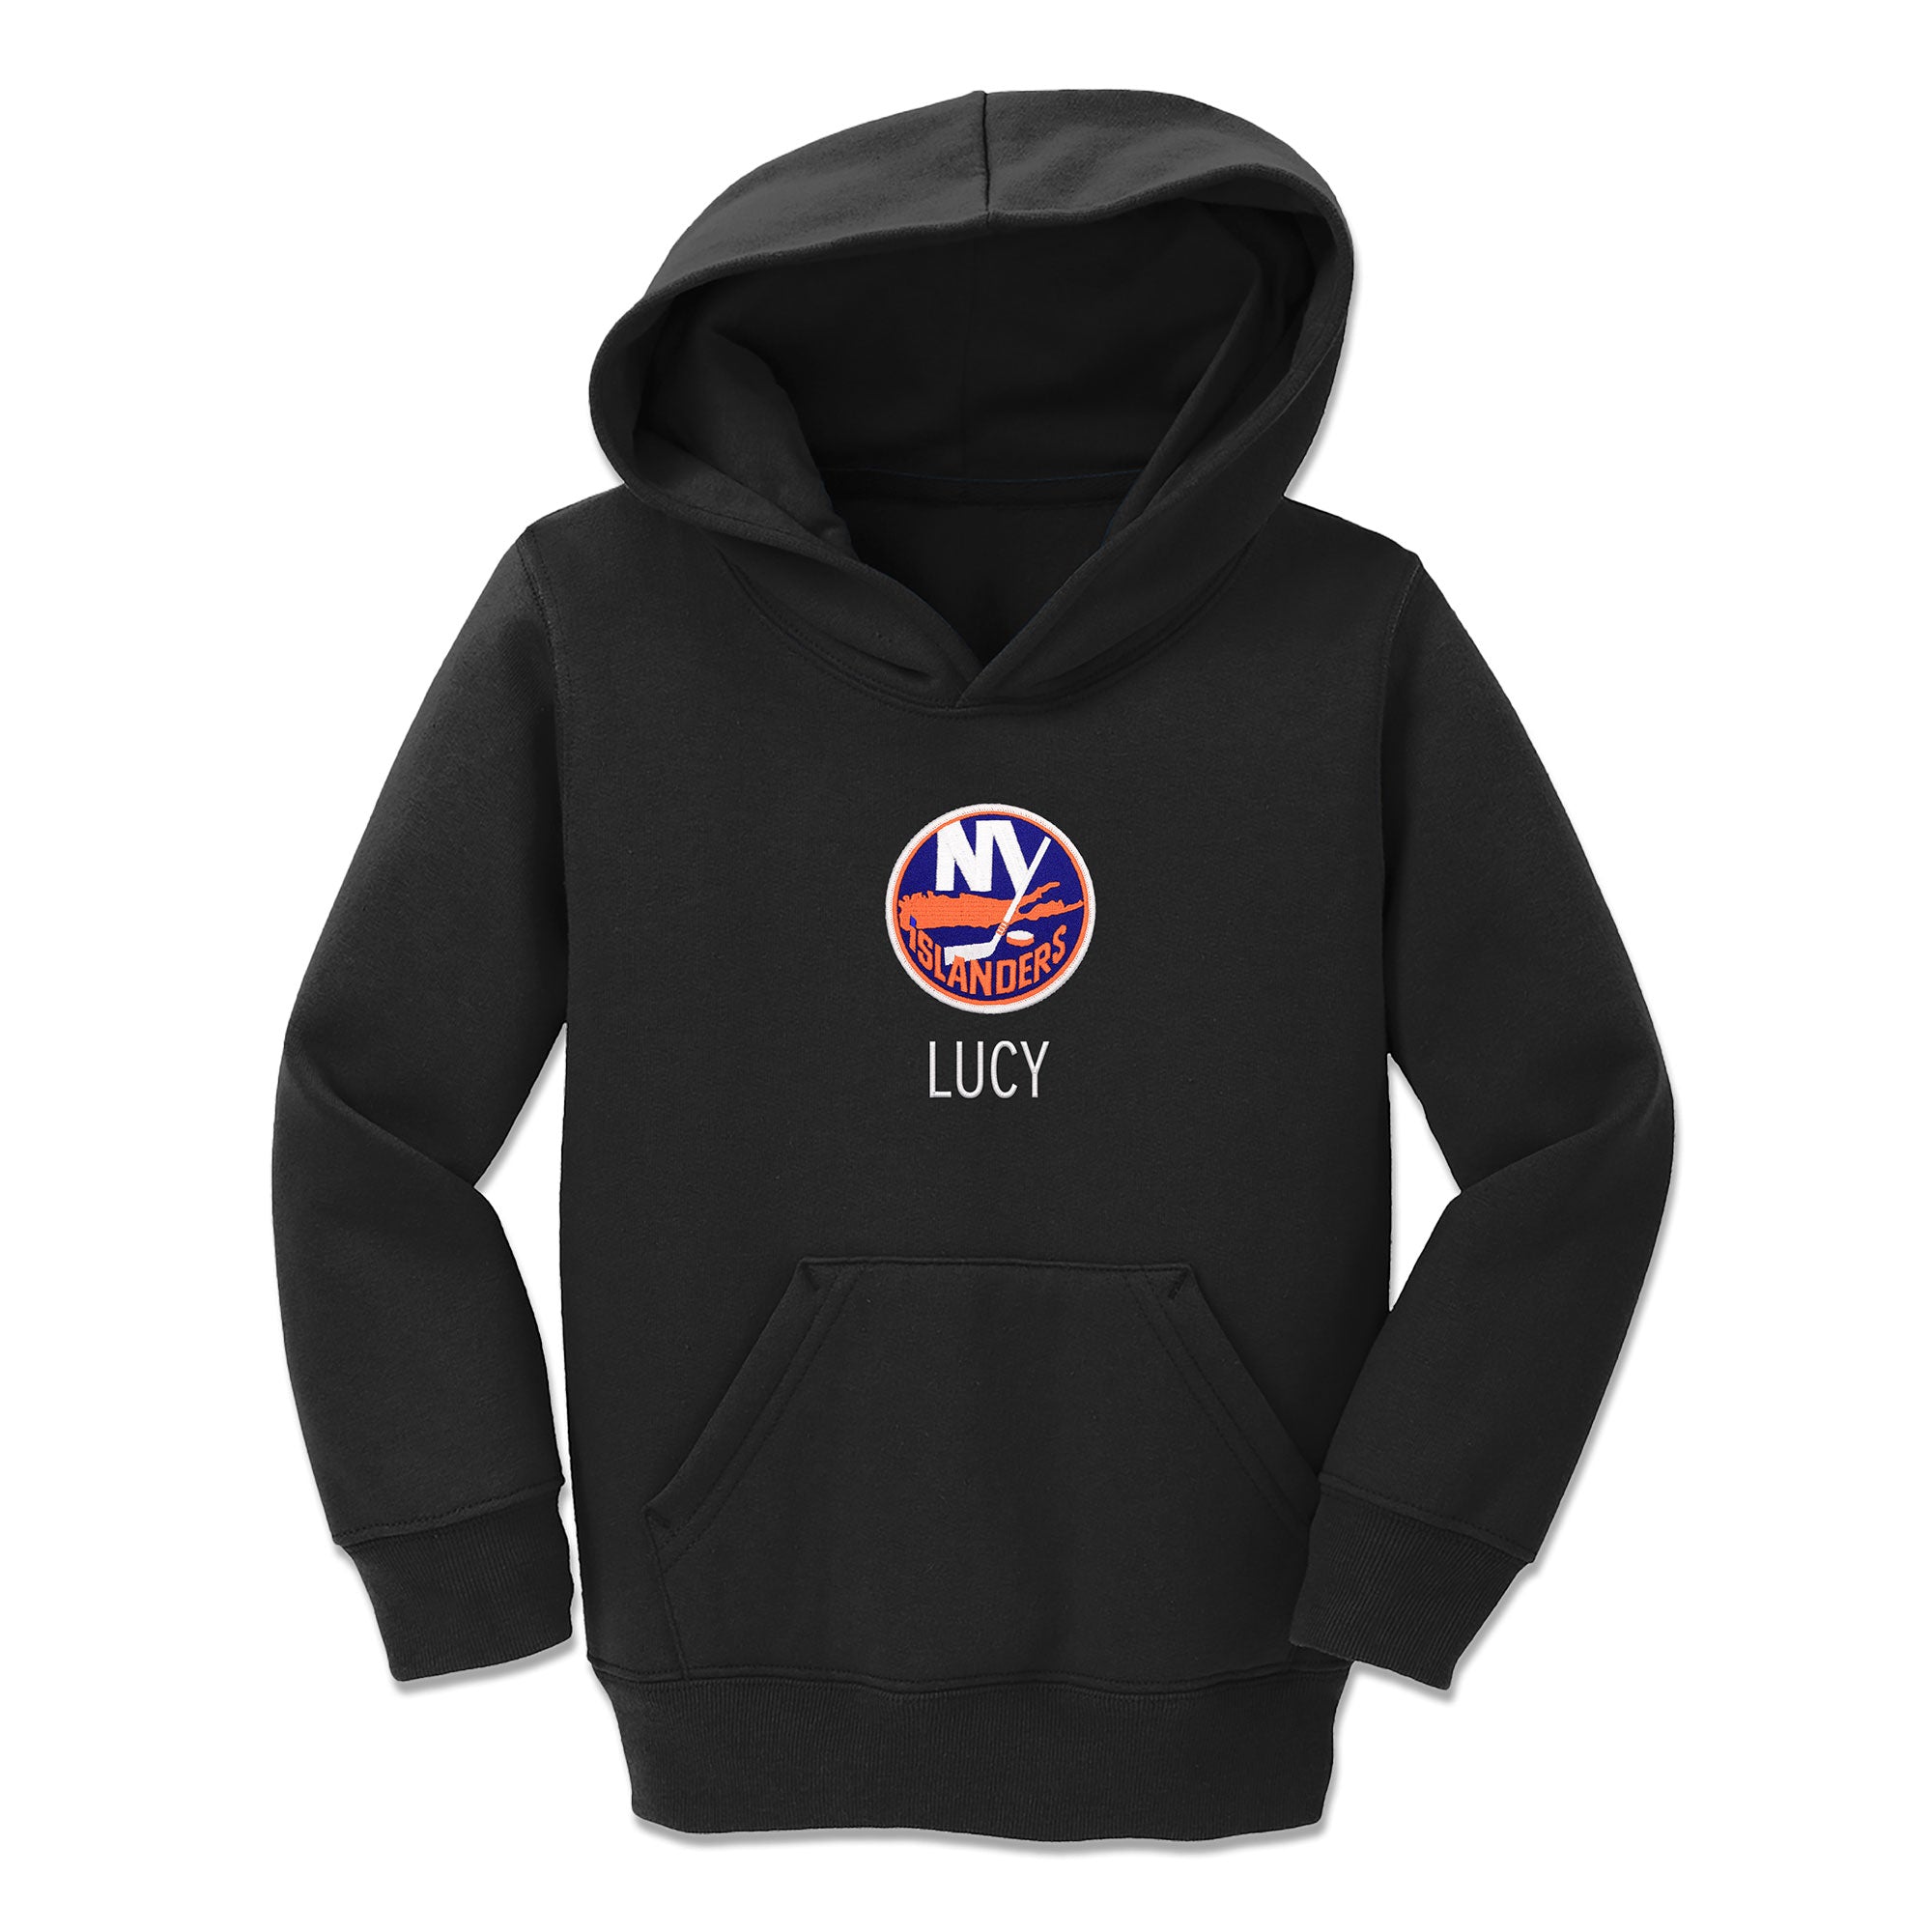 Personalized New York Islanders Toddler Crewneck Sweatshirt Black / 4T